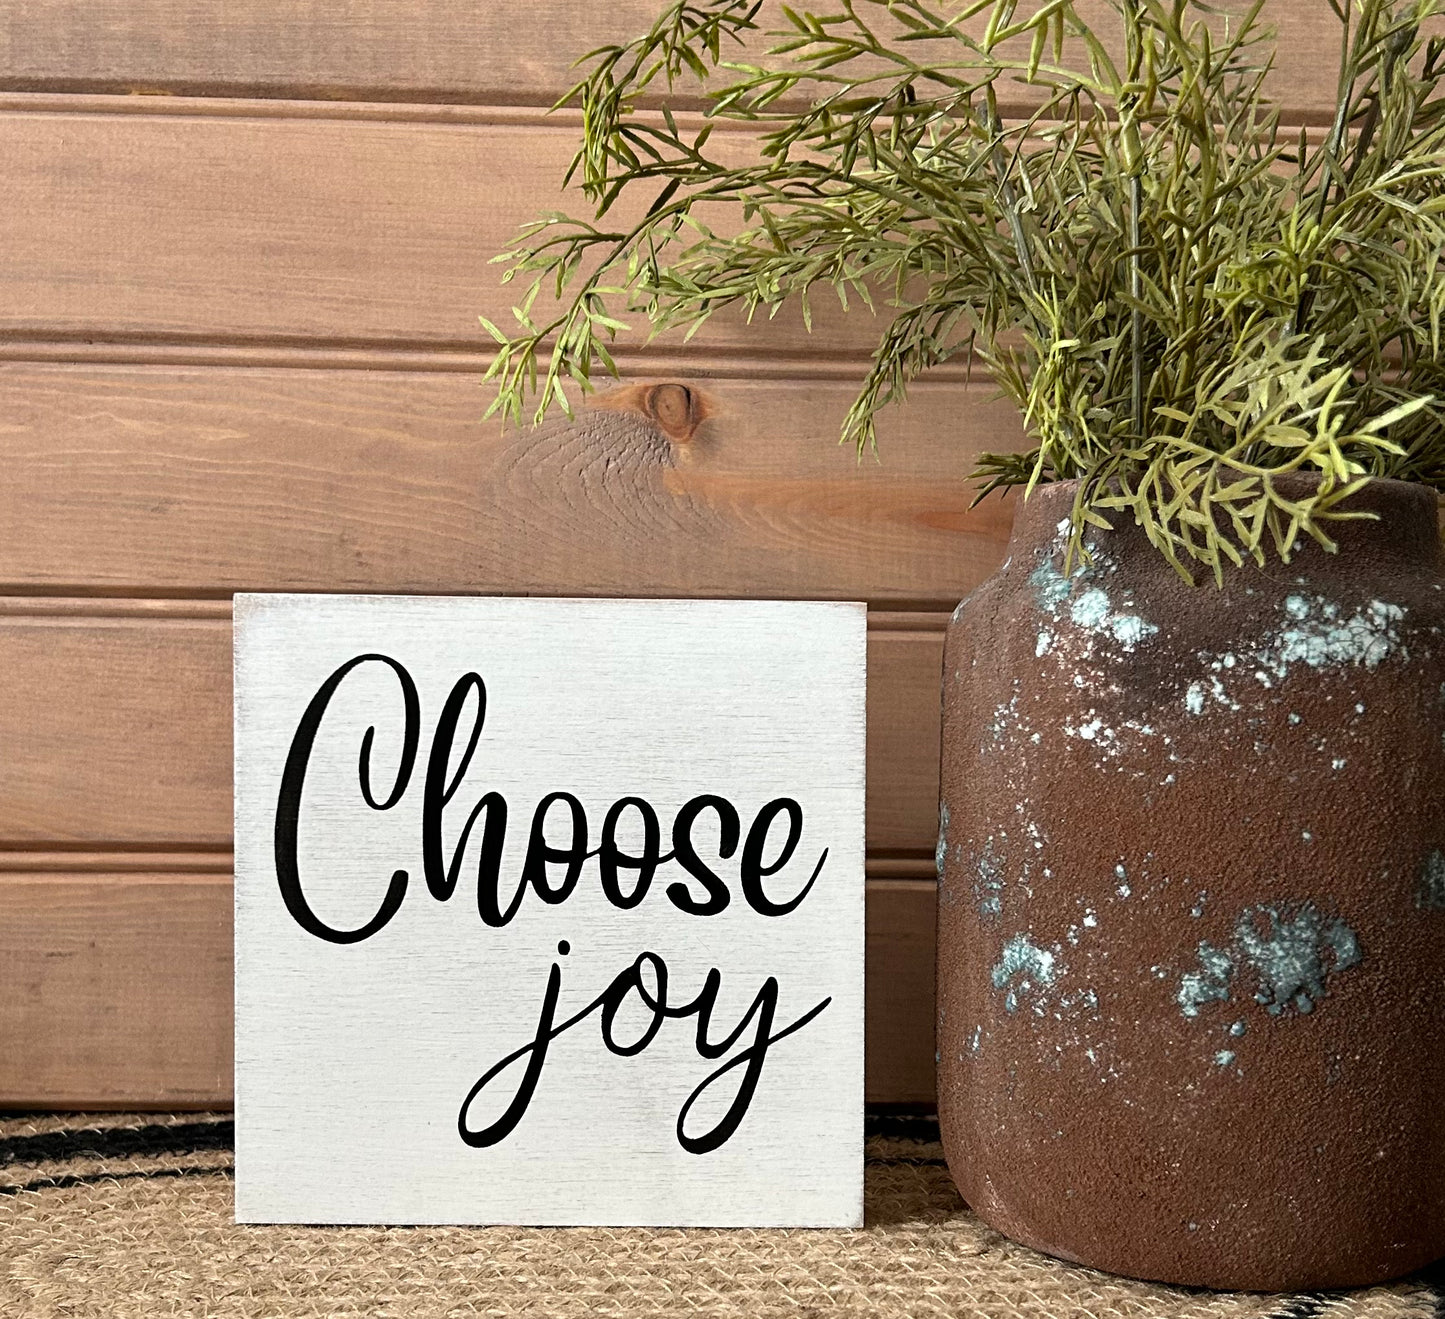 "Choose joy" wood sign